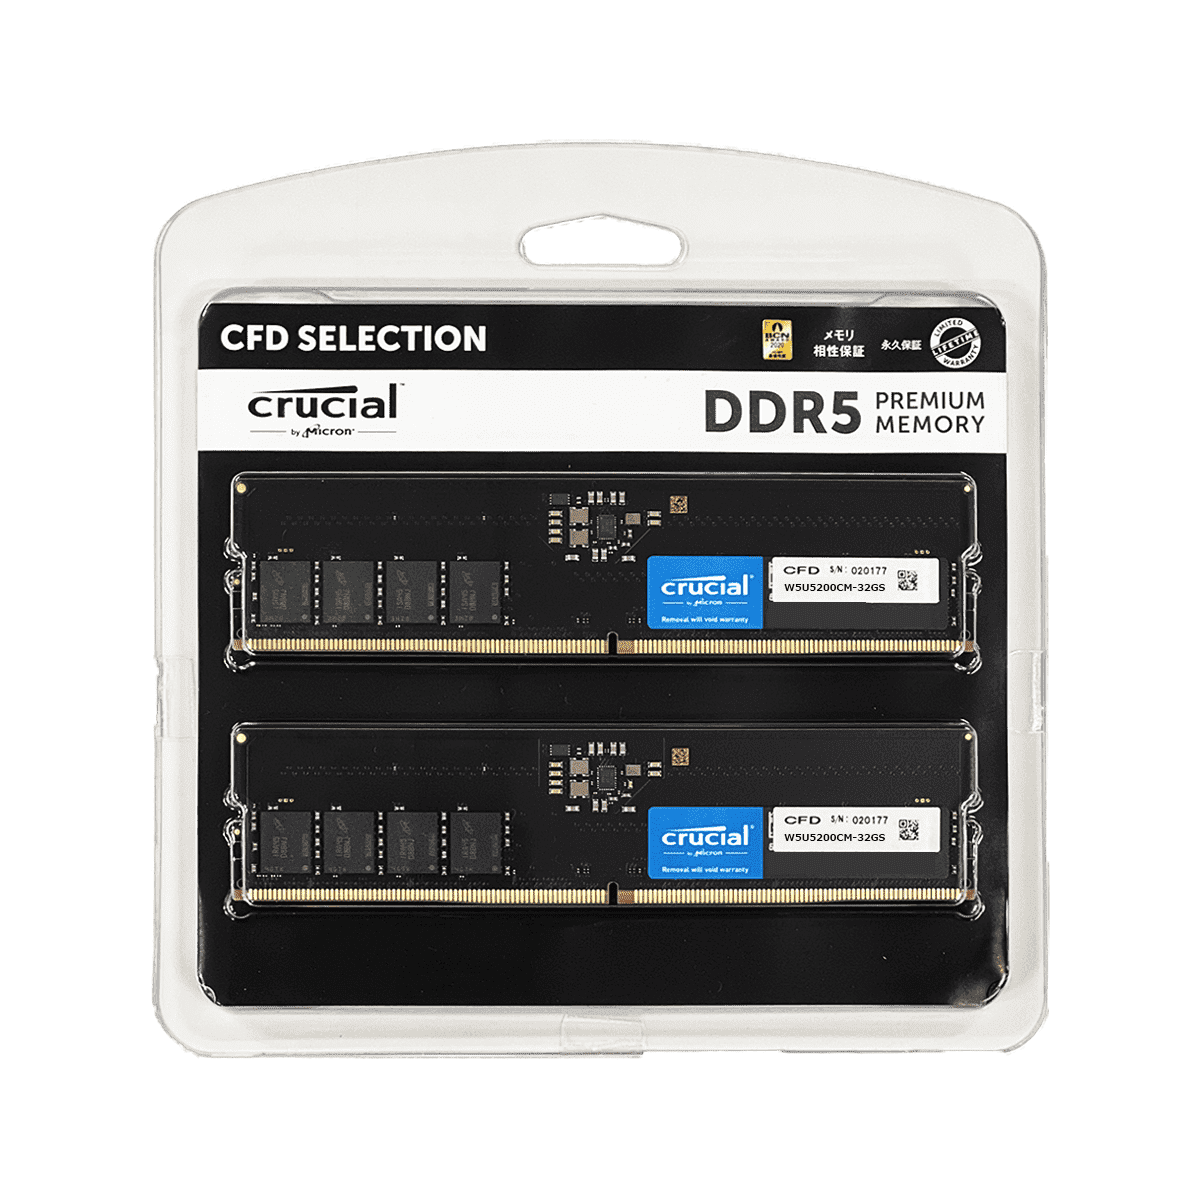 W5U4800CM-16GS | CFD Selection メモリ スタンダードシリーズ DDR5 ...